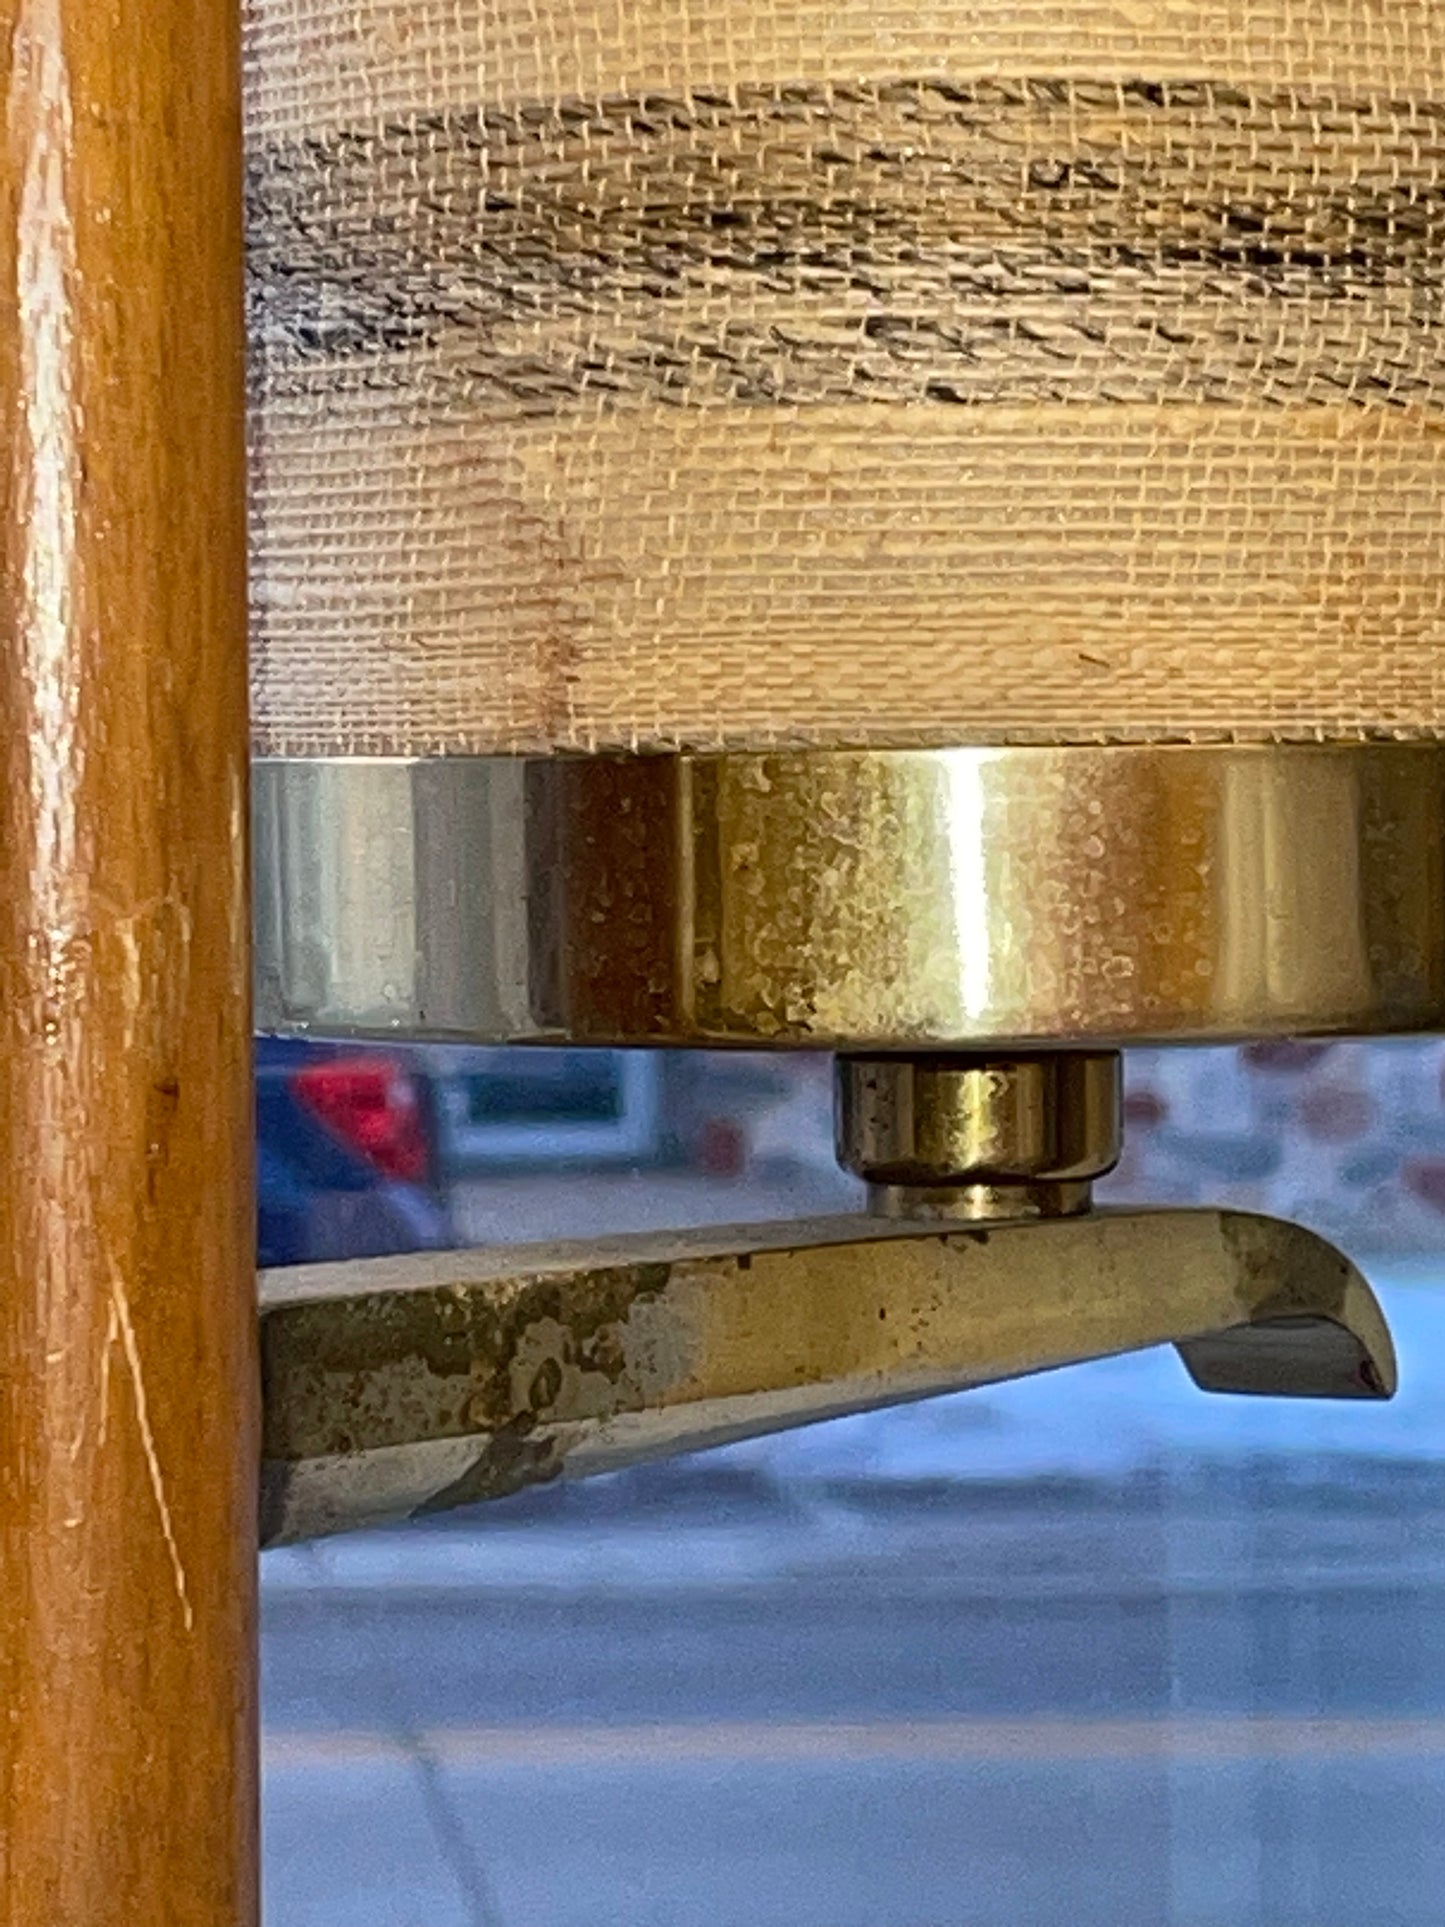 Stiffel tension pole lamp